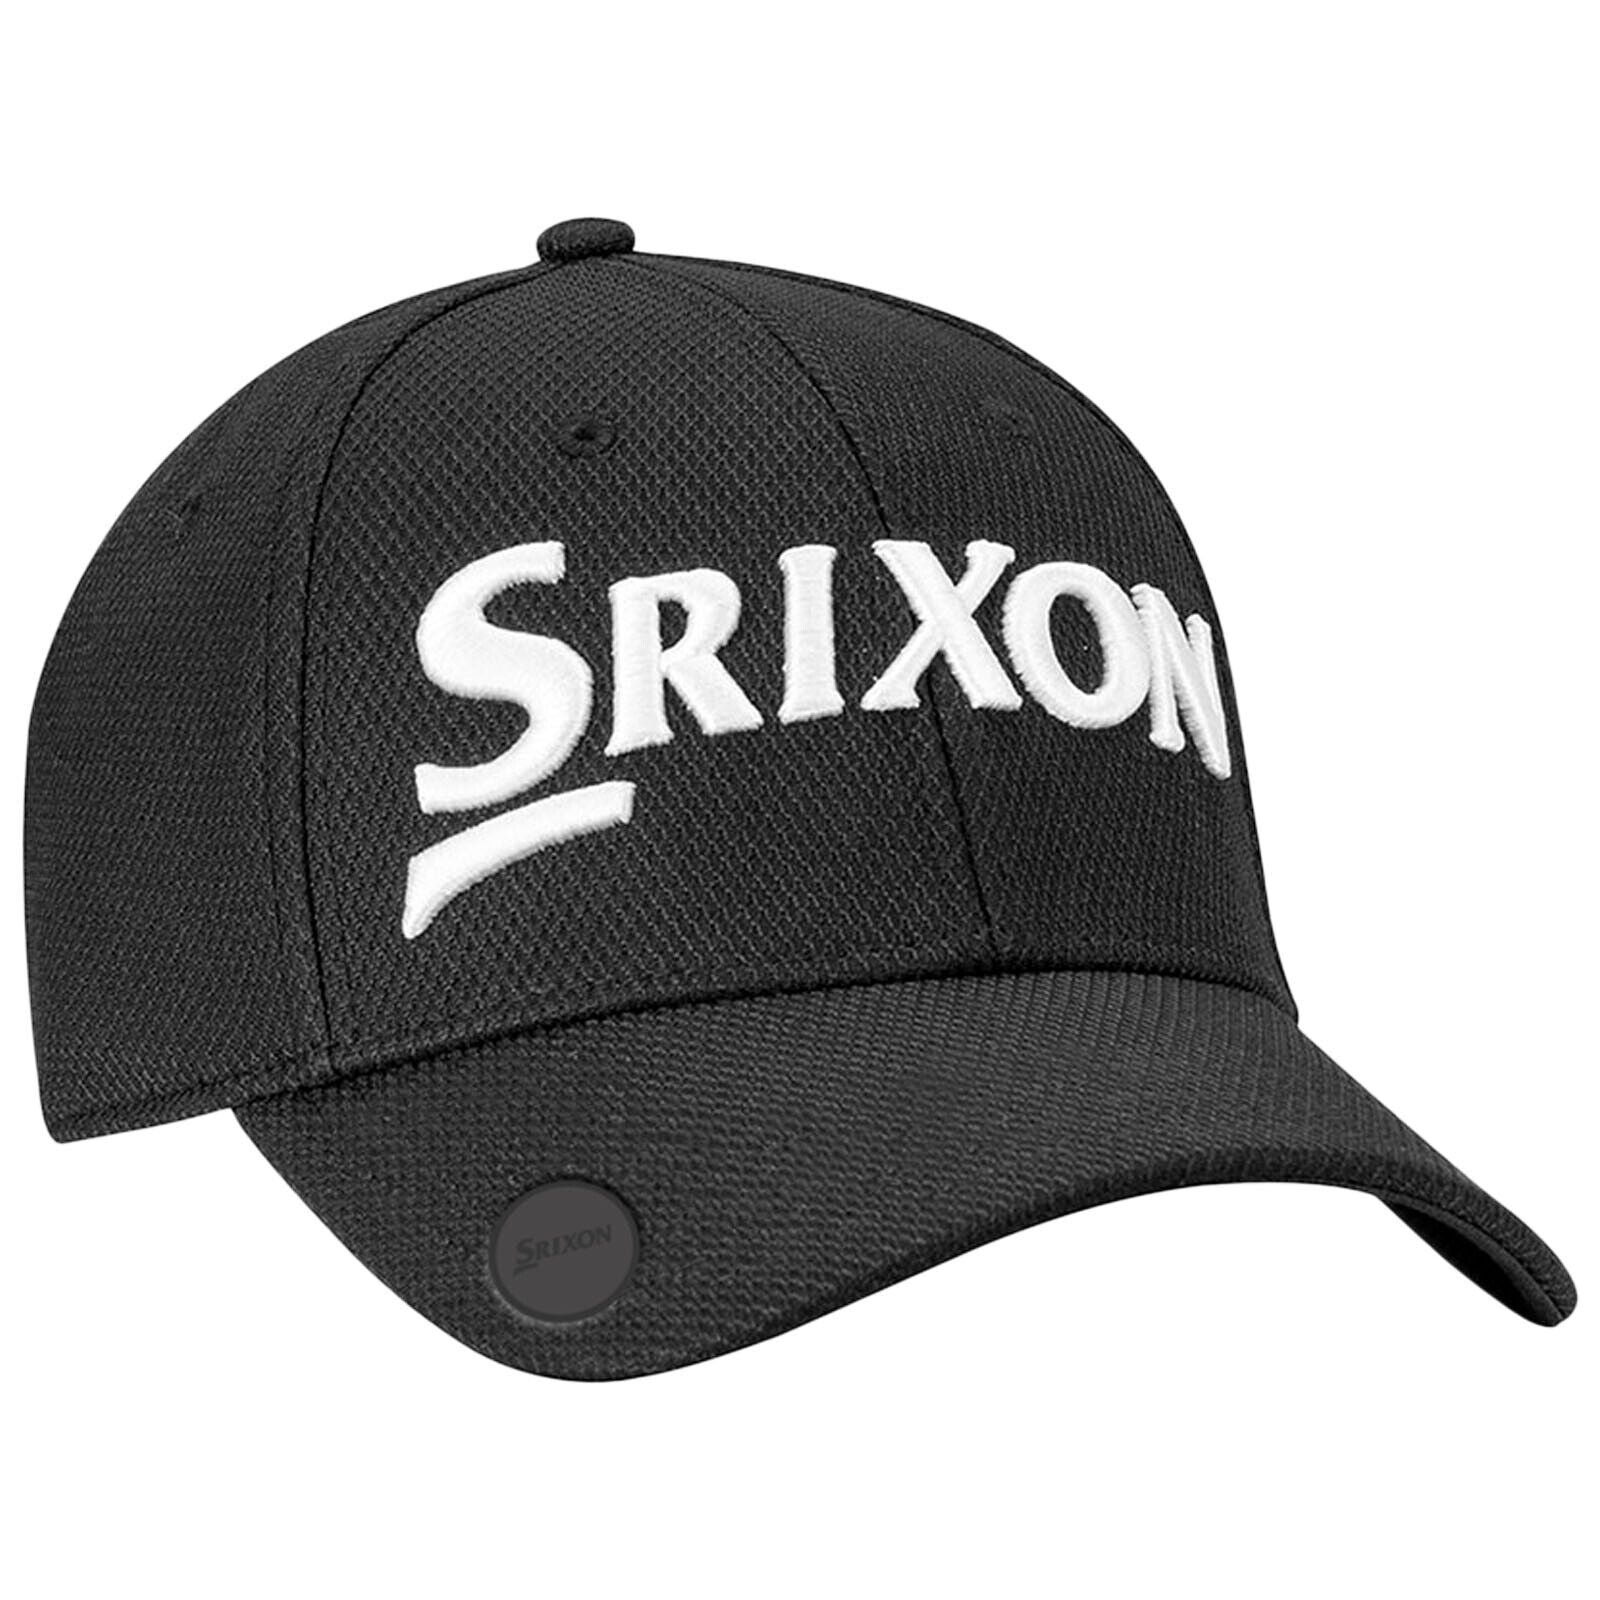 Srixon Ball Marker Golf Cap 121270